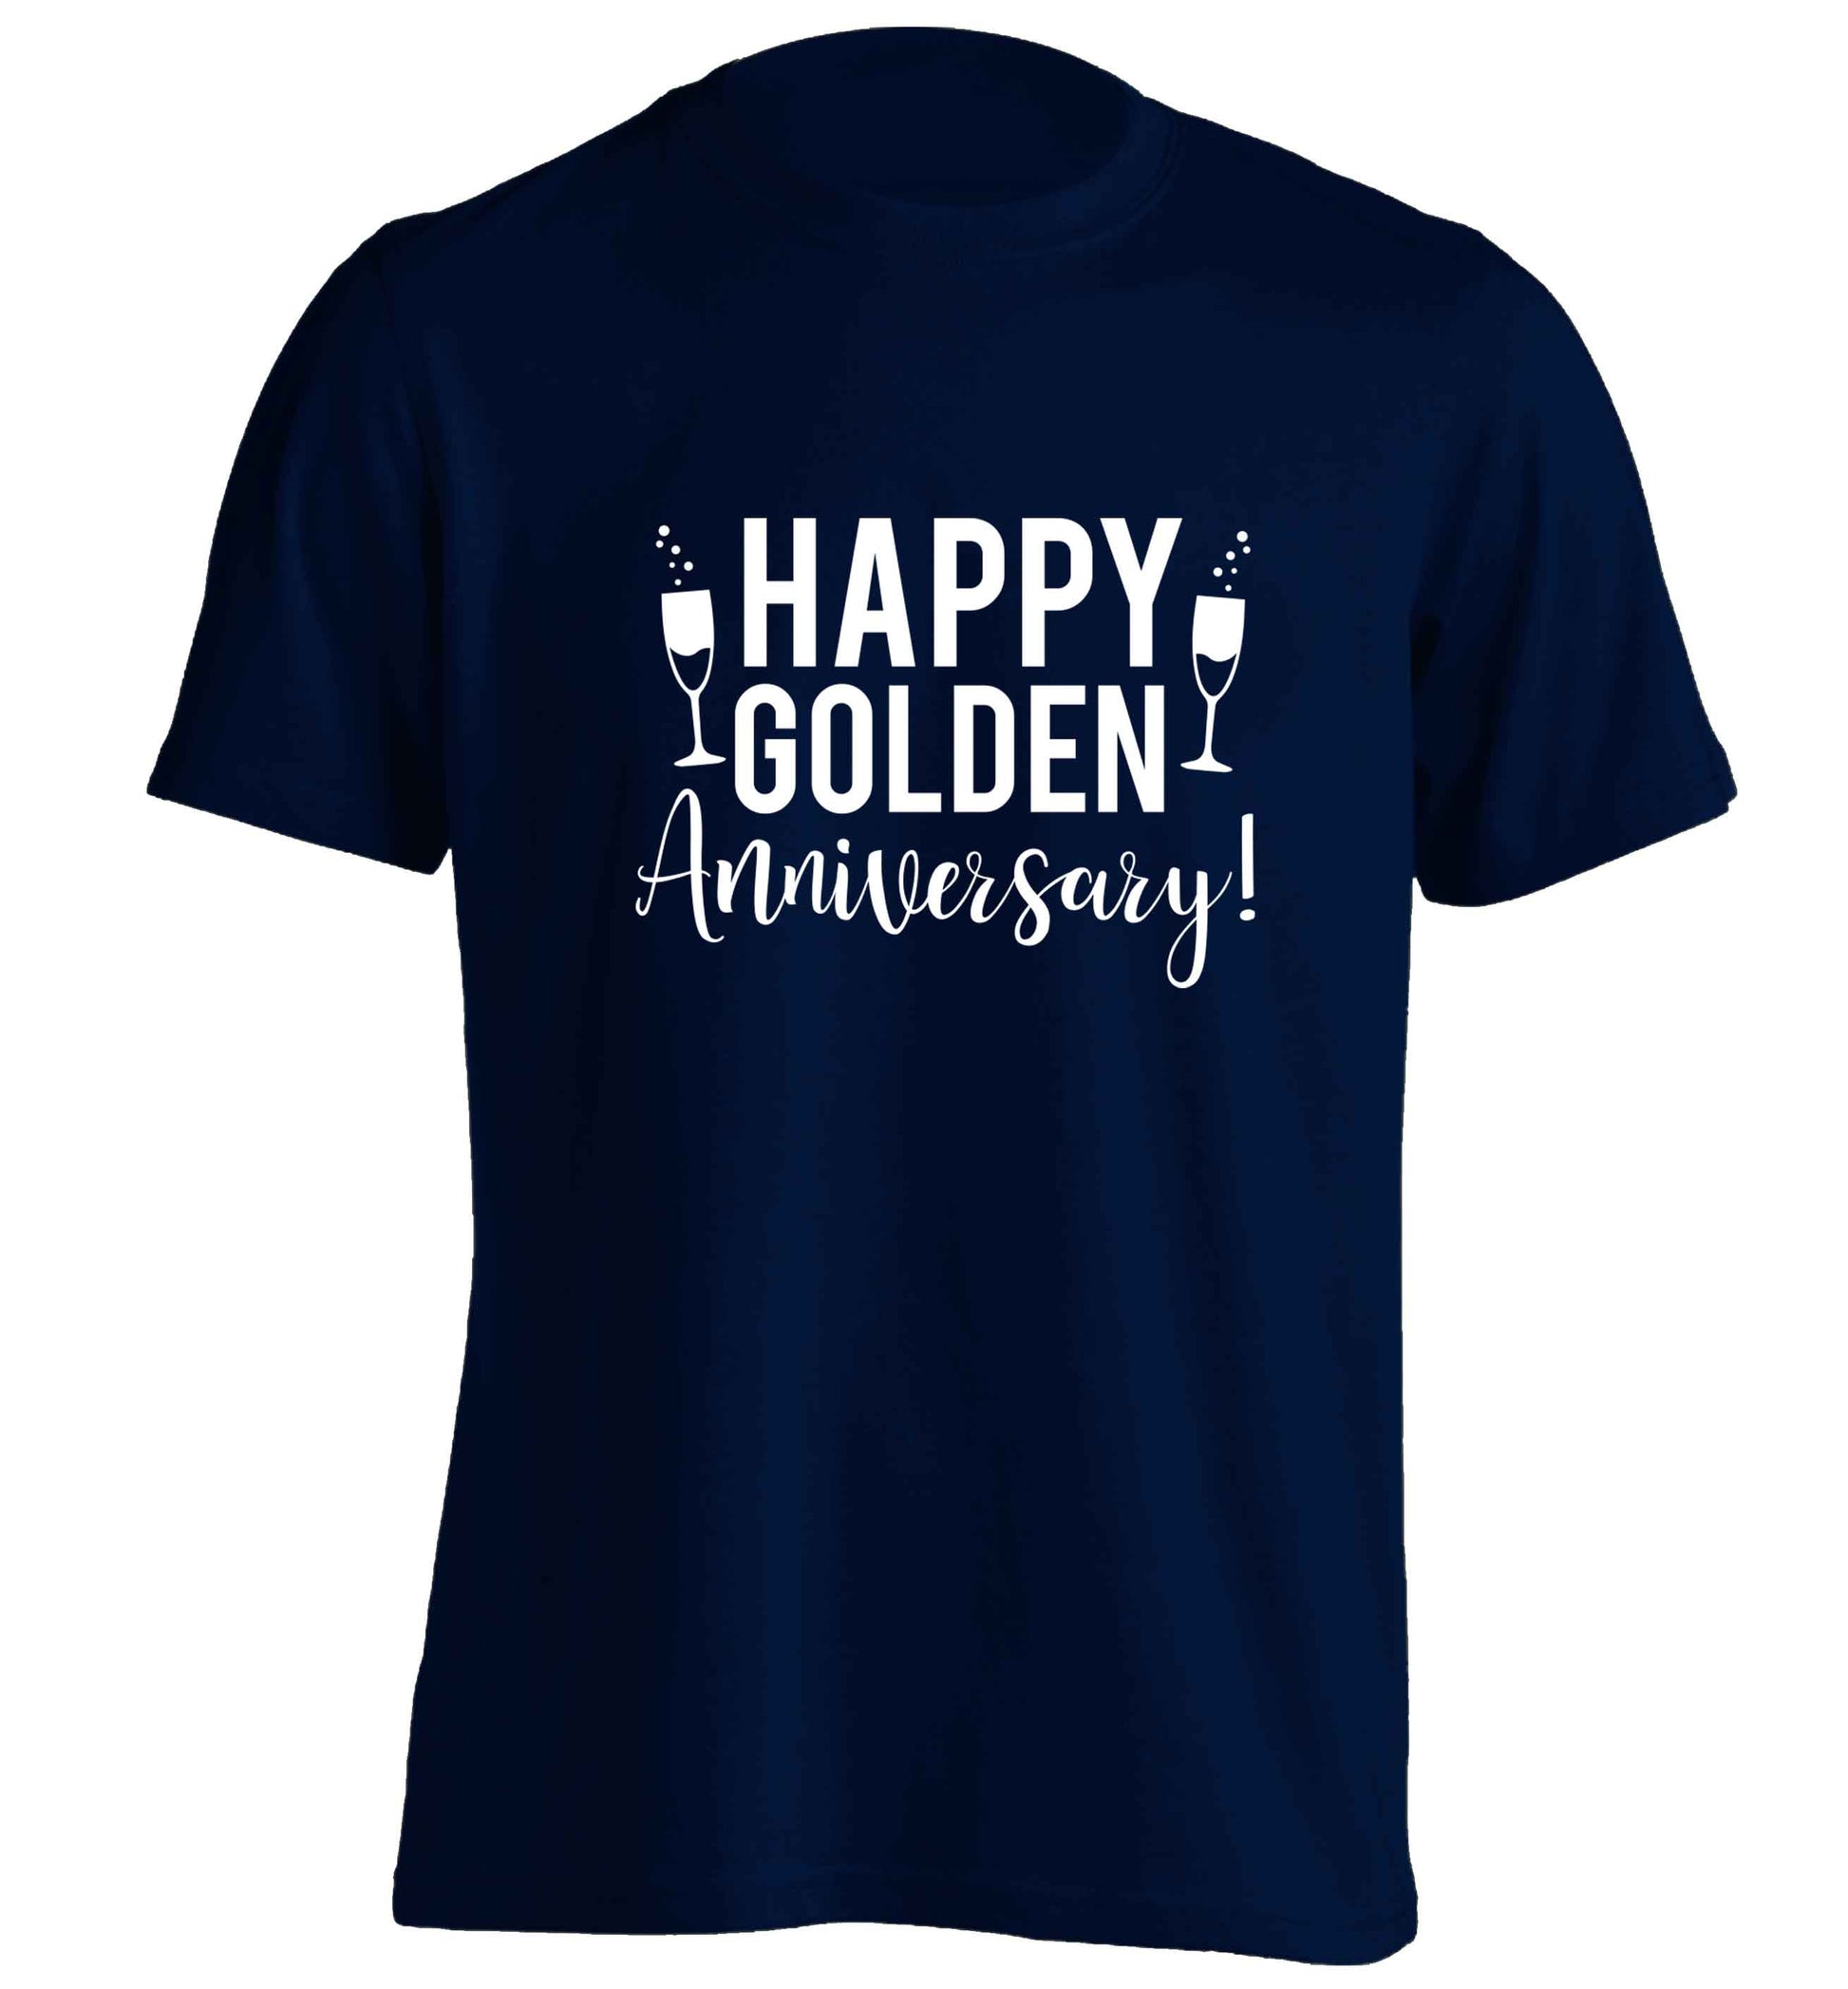 Happy golden anniversary! adults unisex navy Tshirt 2XL